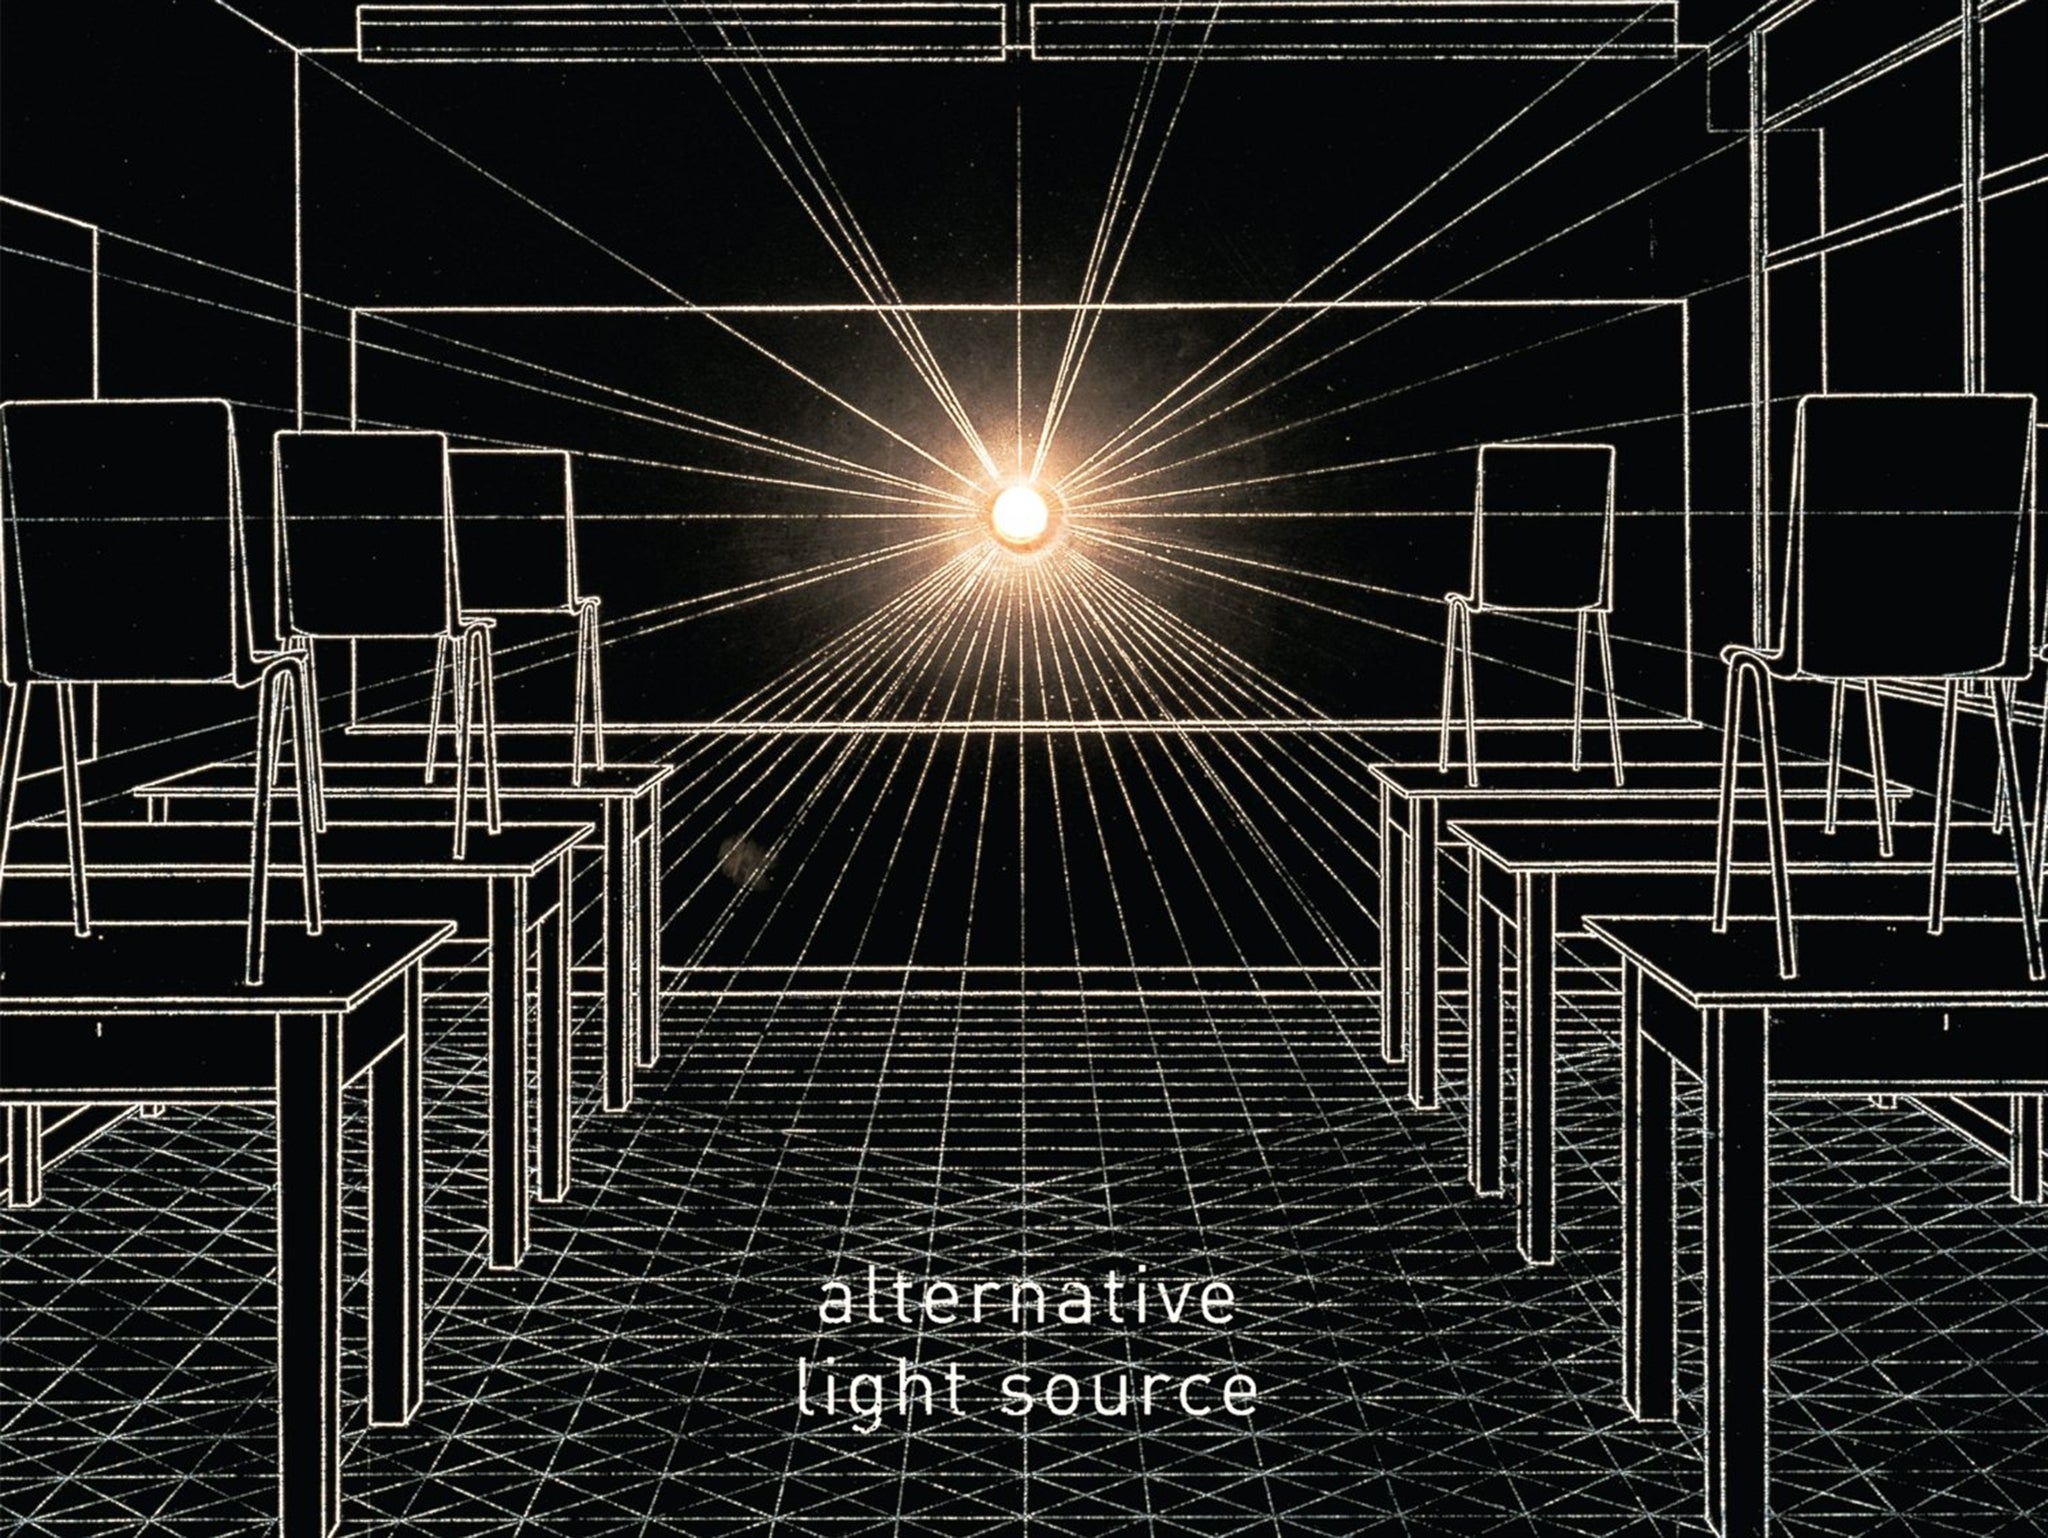 Left Field 'Alternative Light Source'